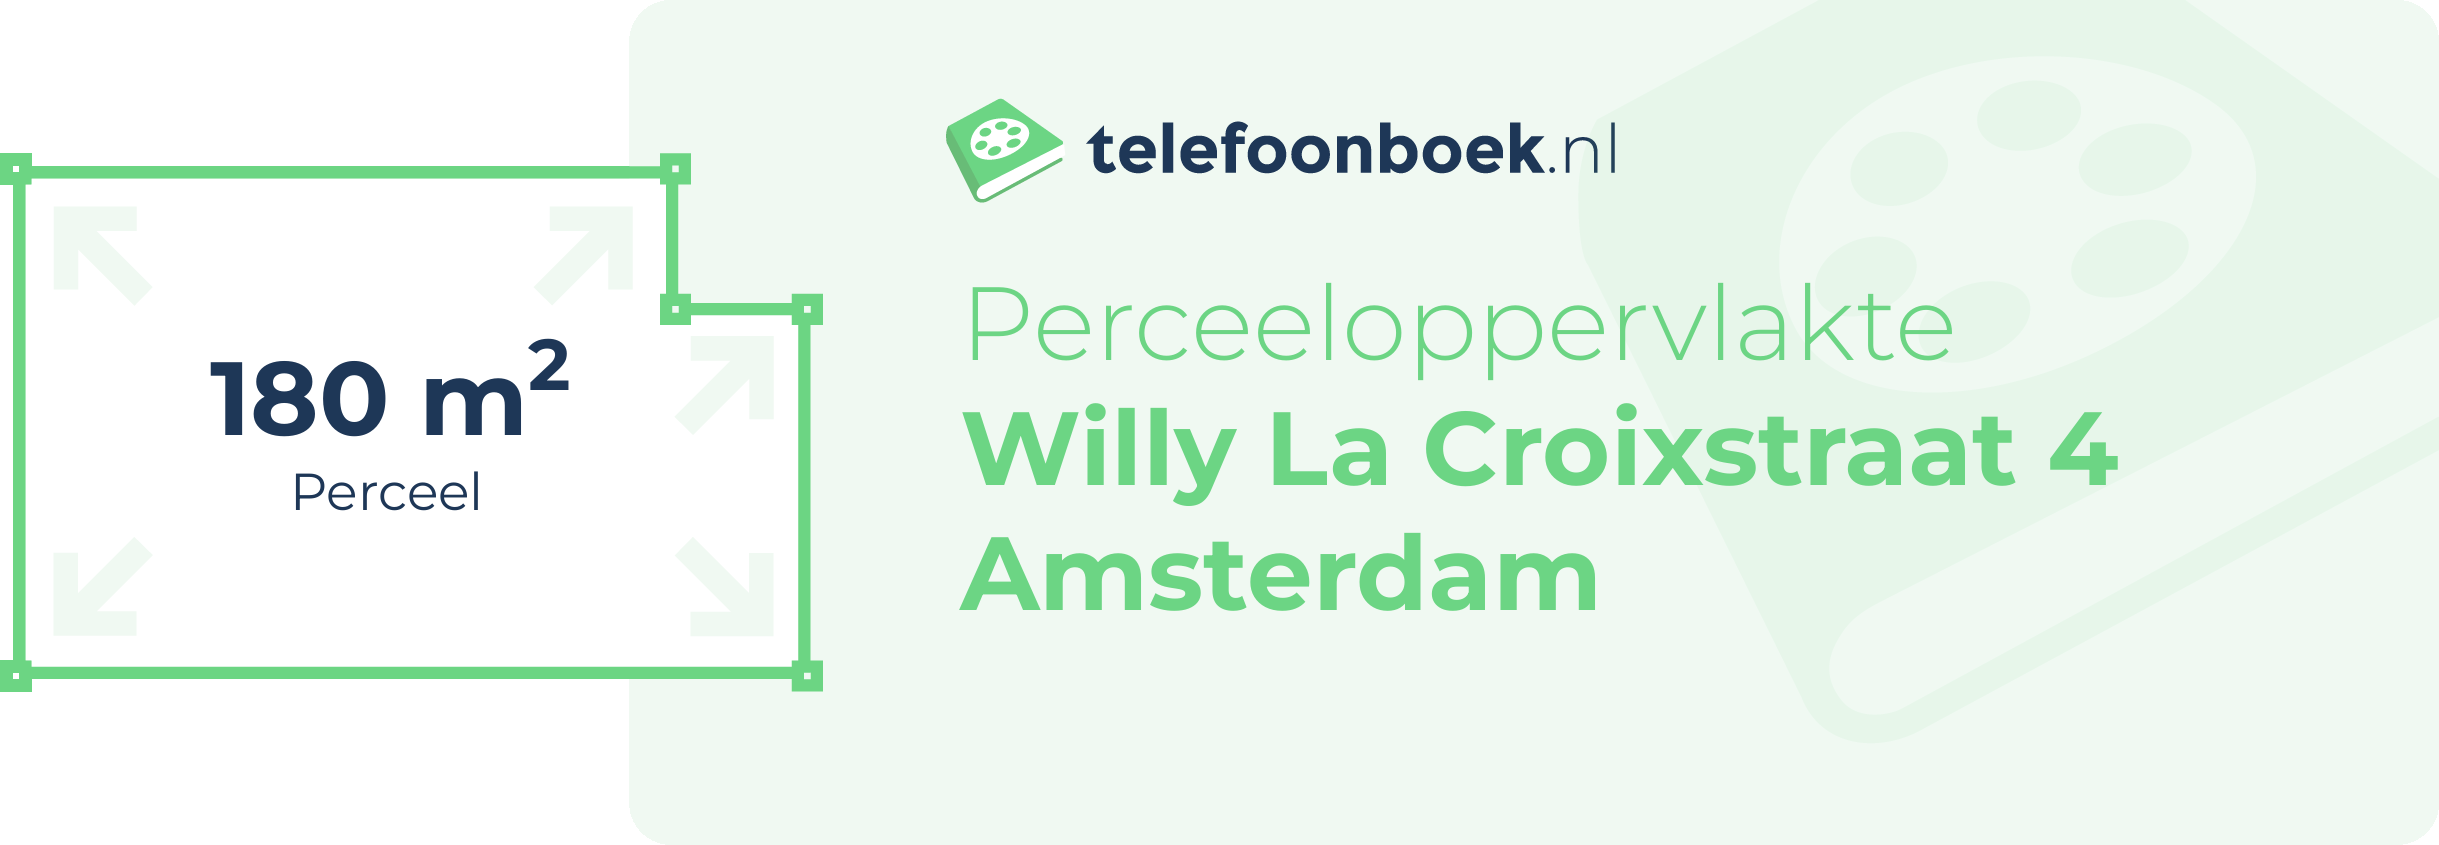 Perceeloppervlakte Willy La Croixstraat 4 Amsterdam